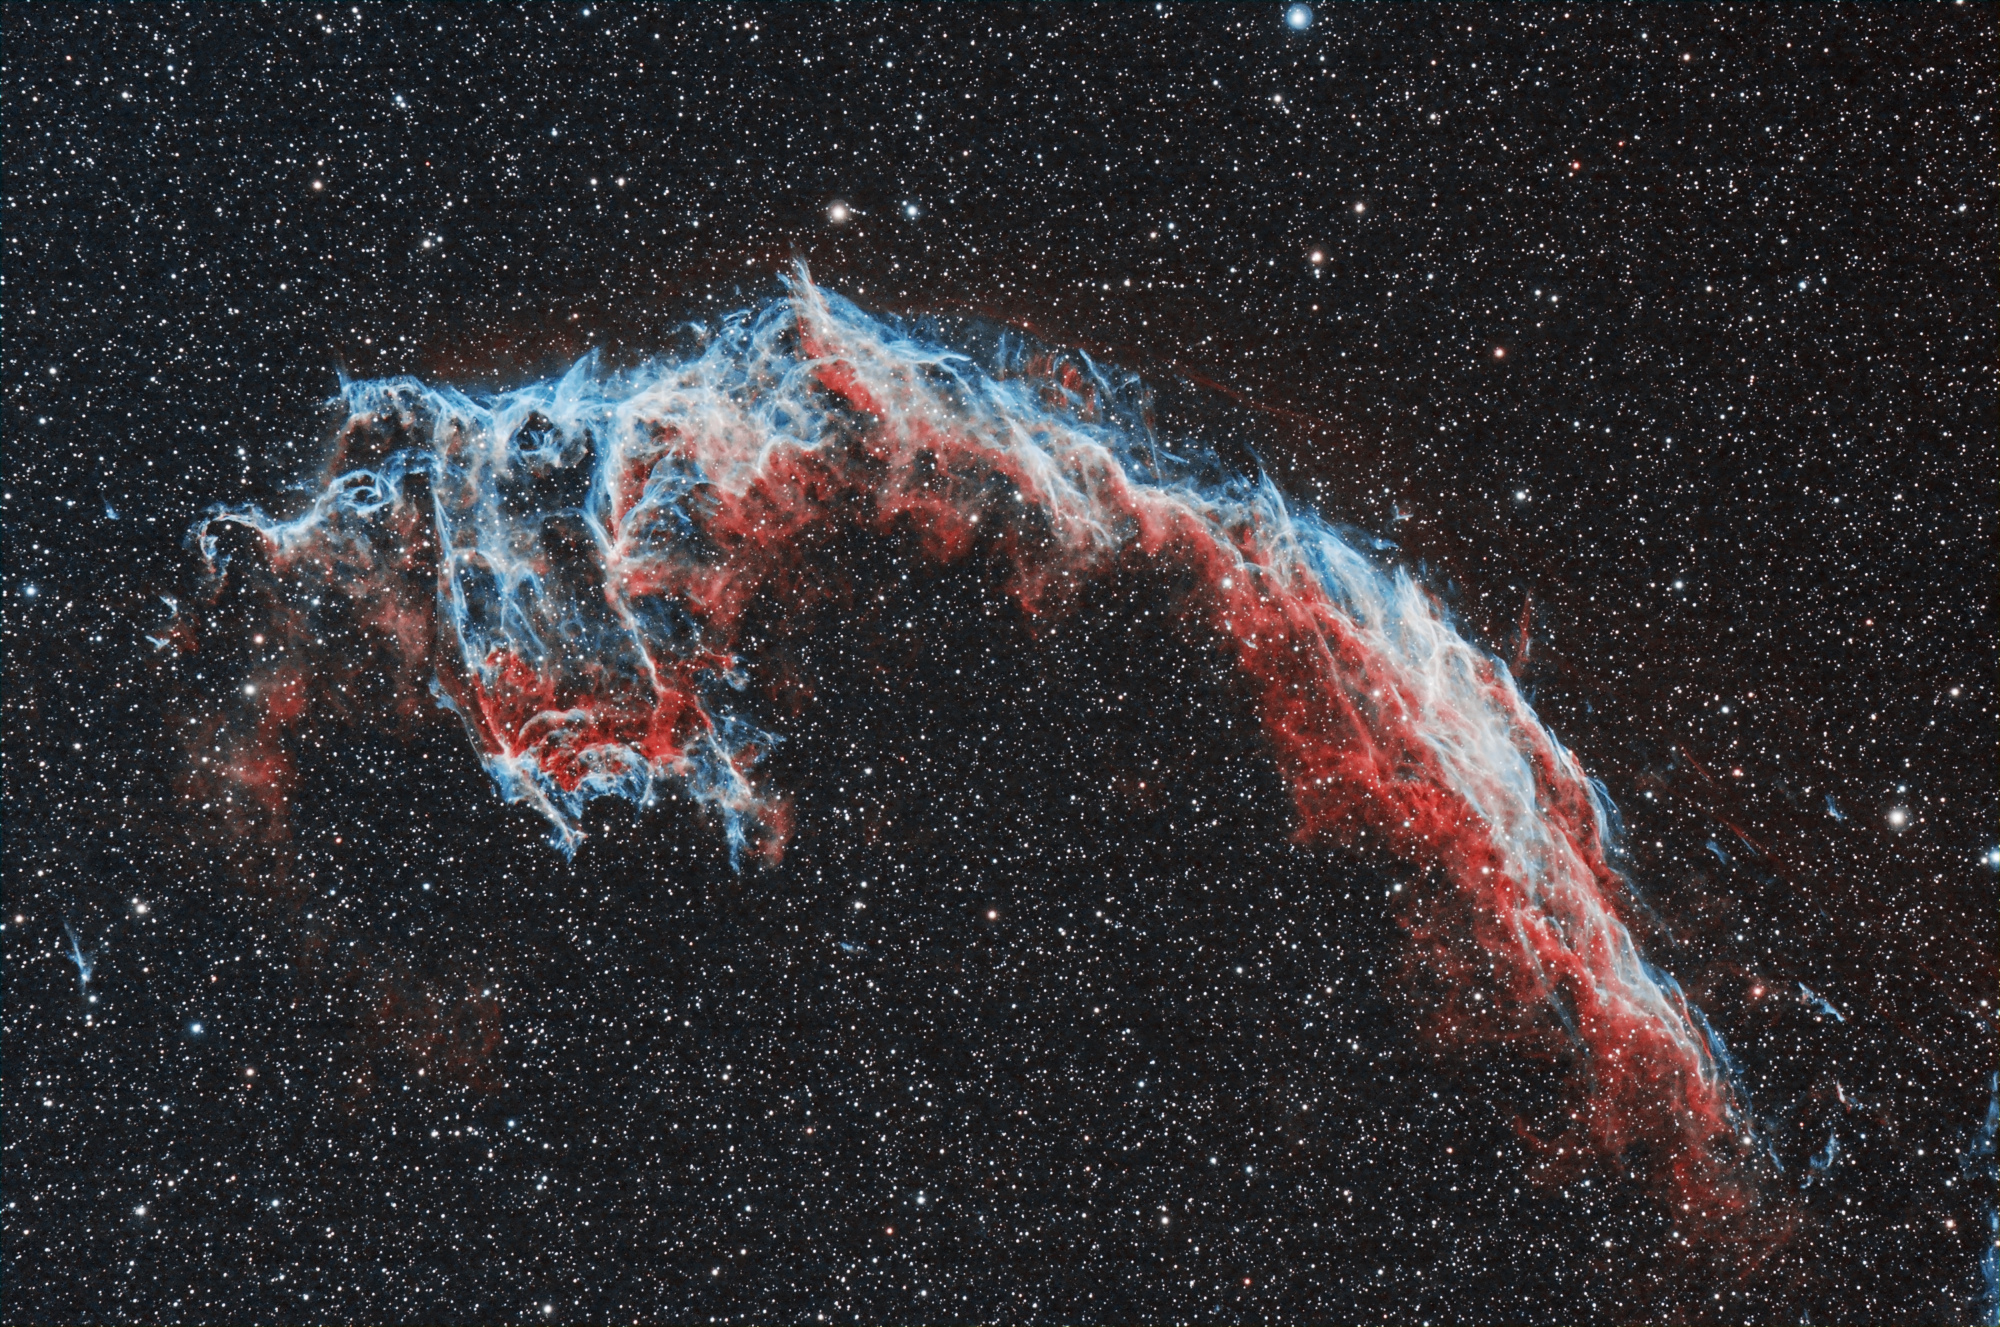 NGC_6992_SIRIL-HOO-2-iris-1-cs5-7-FINAL-3.jpg